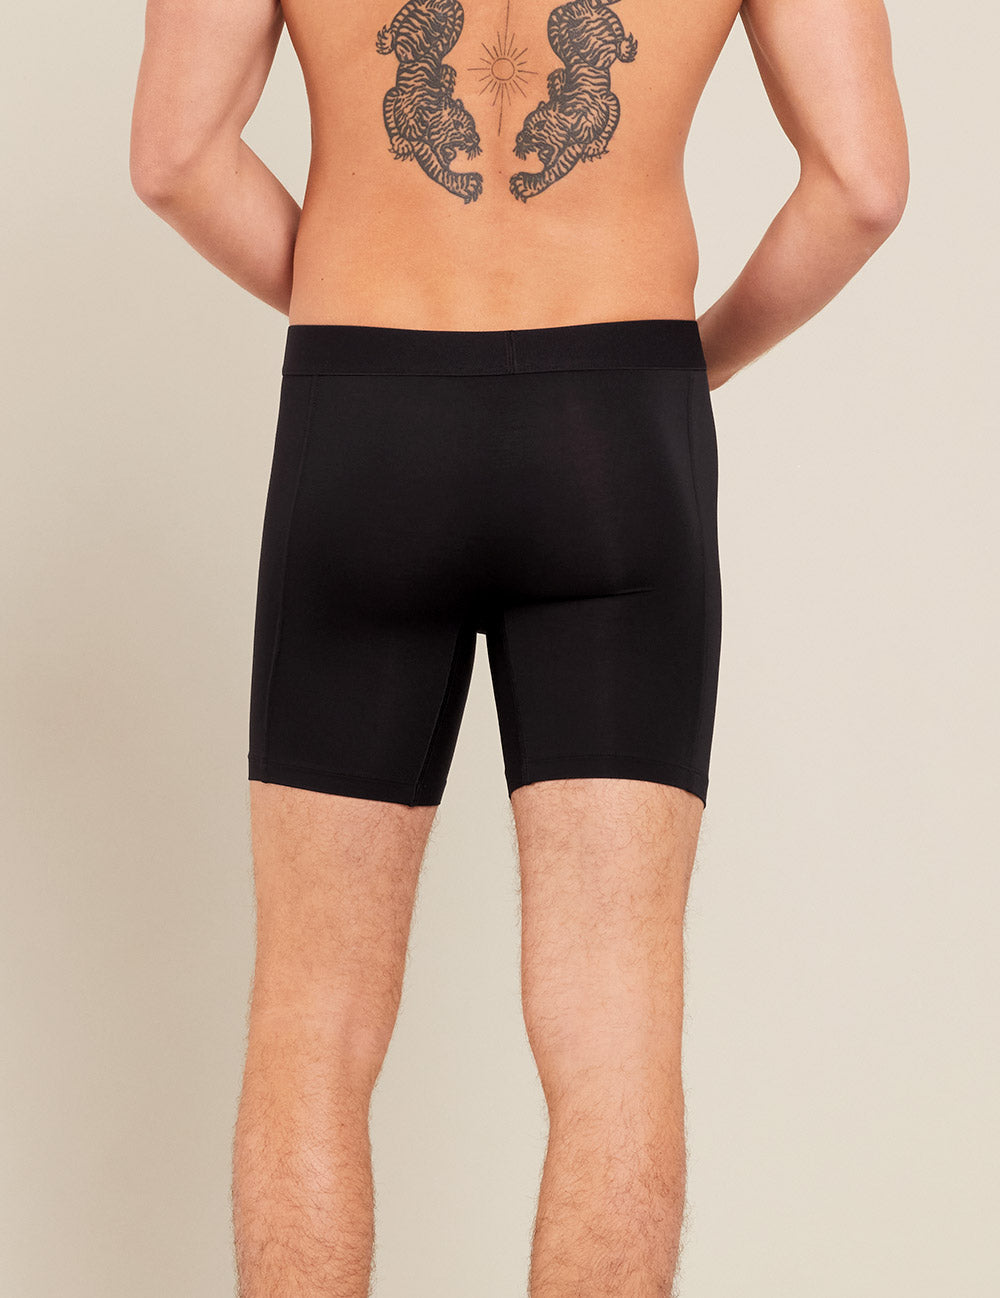 KOERIM Men's Long Leg Boxer Briefs 5Pack,Anti-Chafing, Moisture-Wicking  Underwear, Odor Control